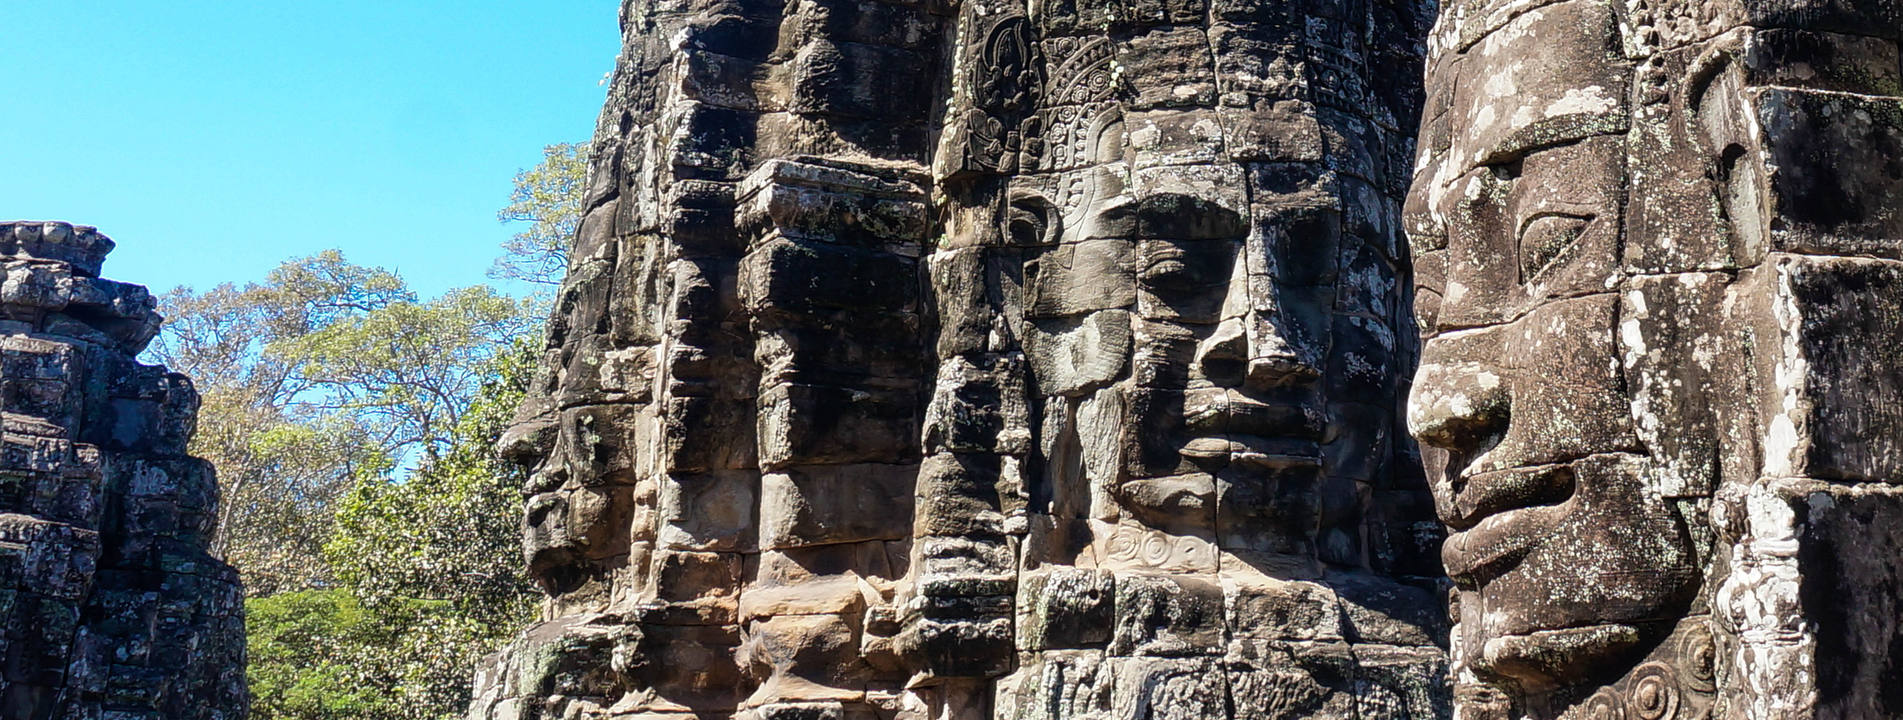 Le sourir d'Angkor